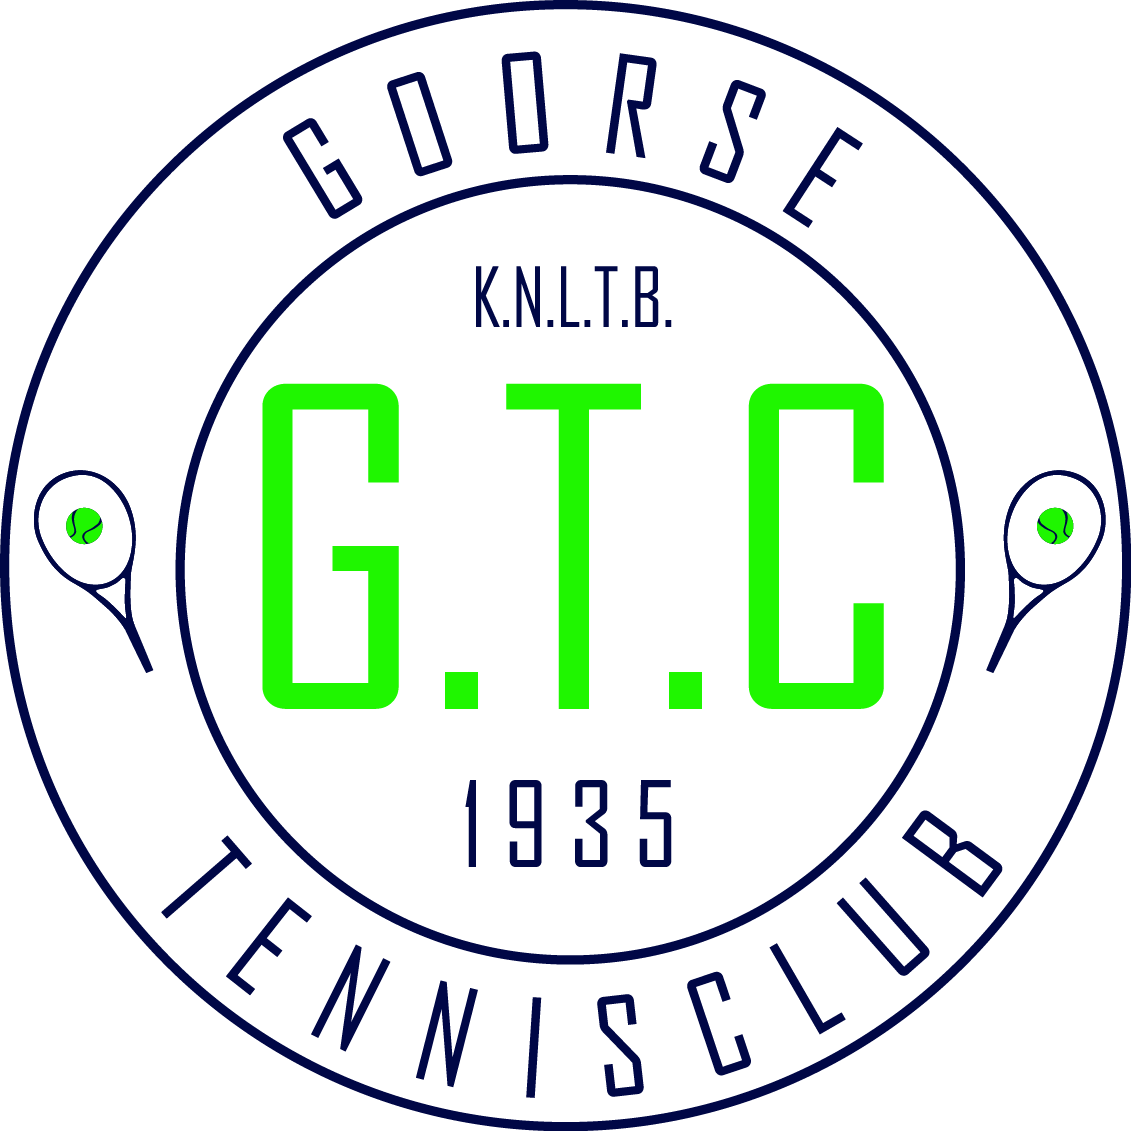 Profile image of venue Goorse TC